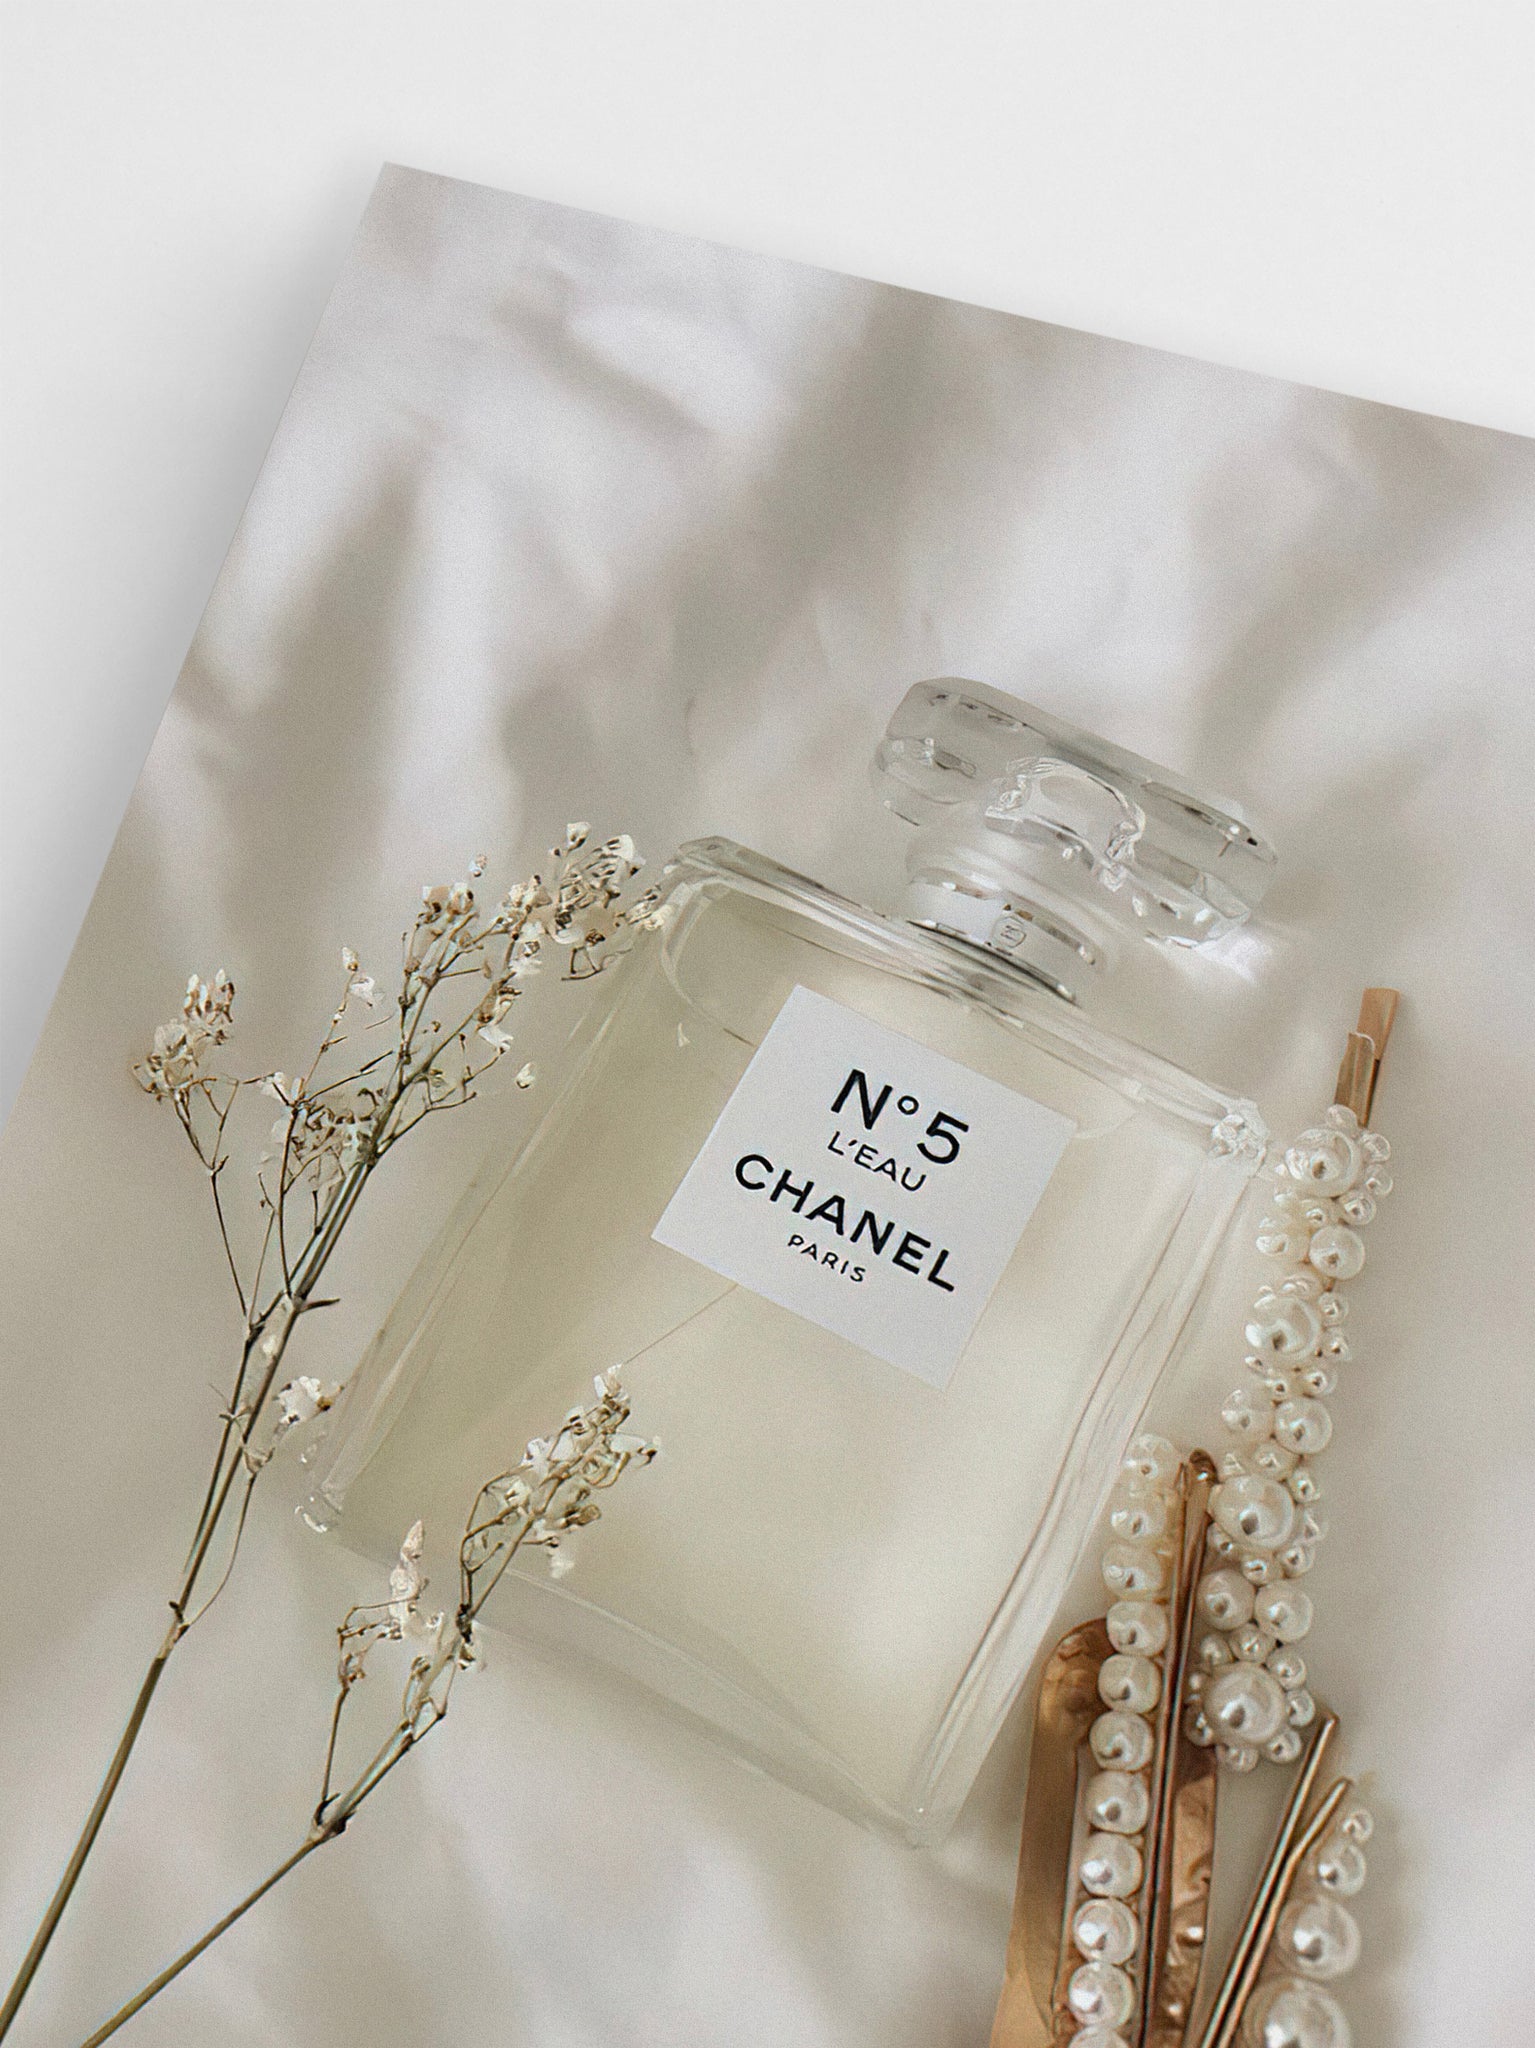 No. 5 Chanel Perfume  wall art